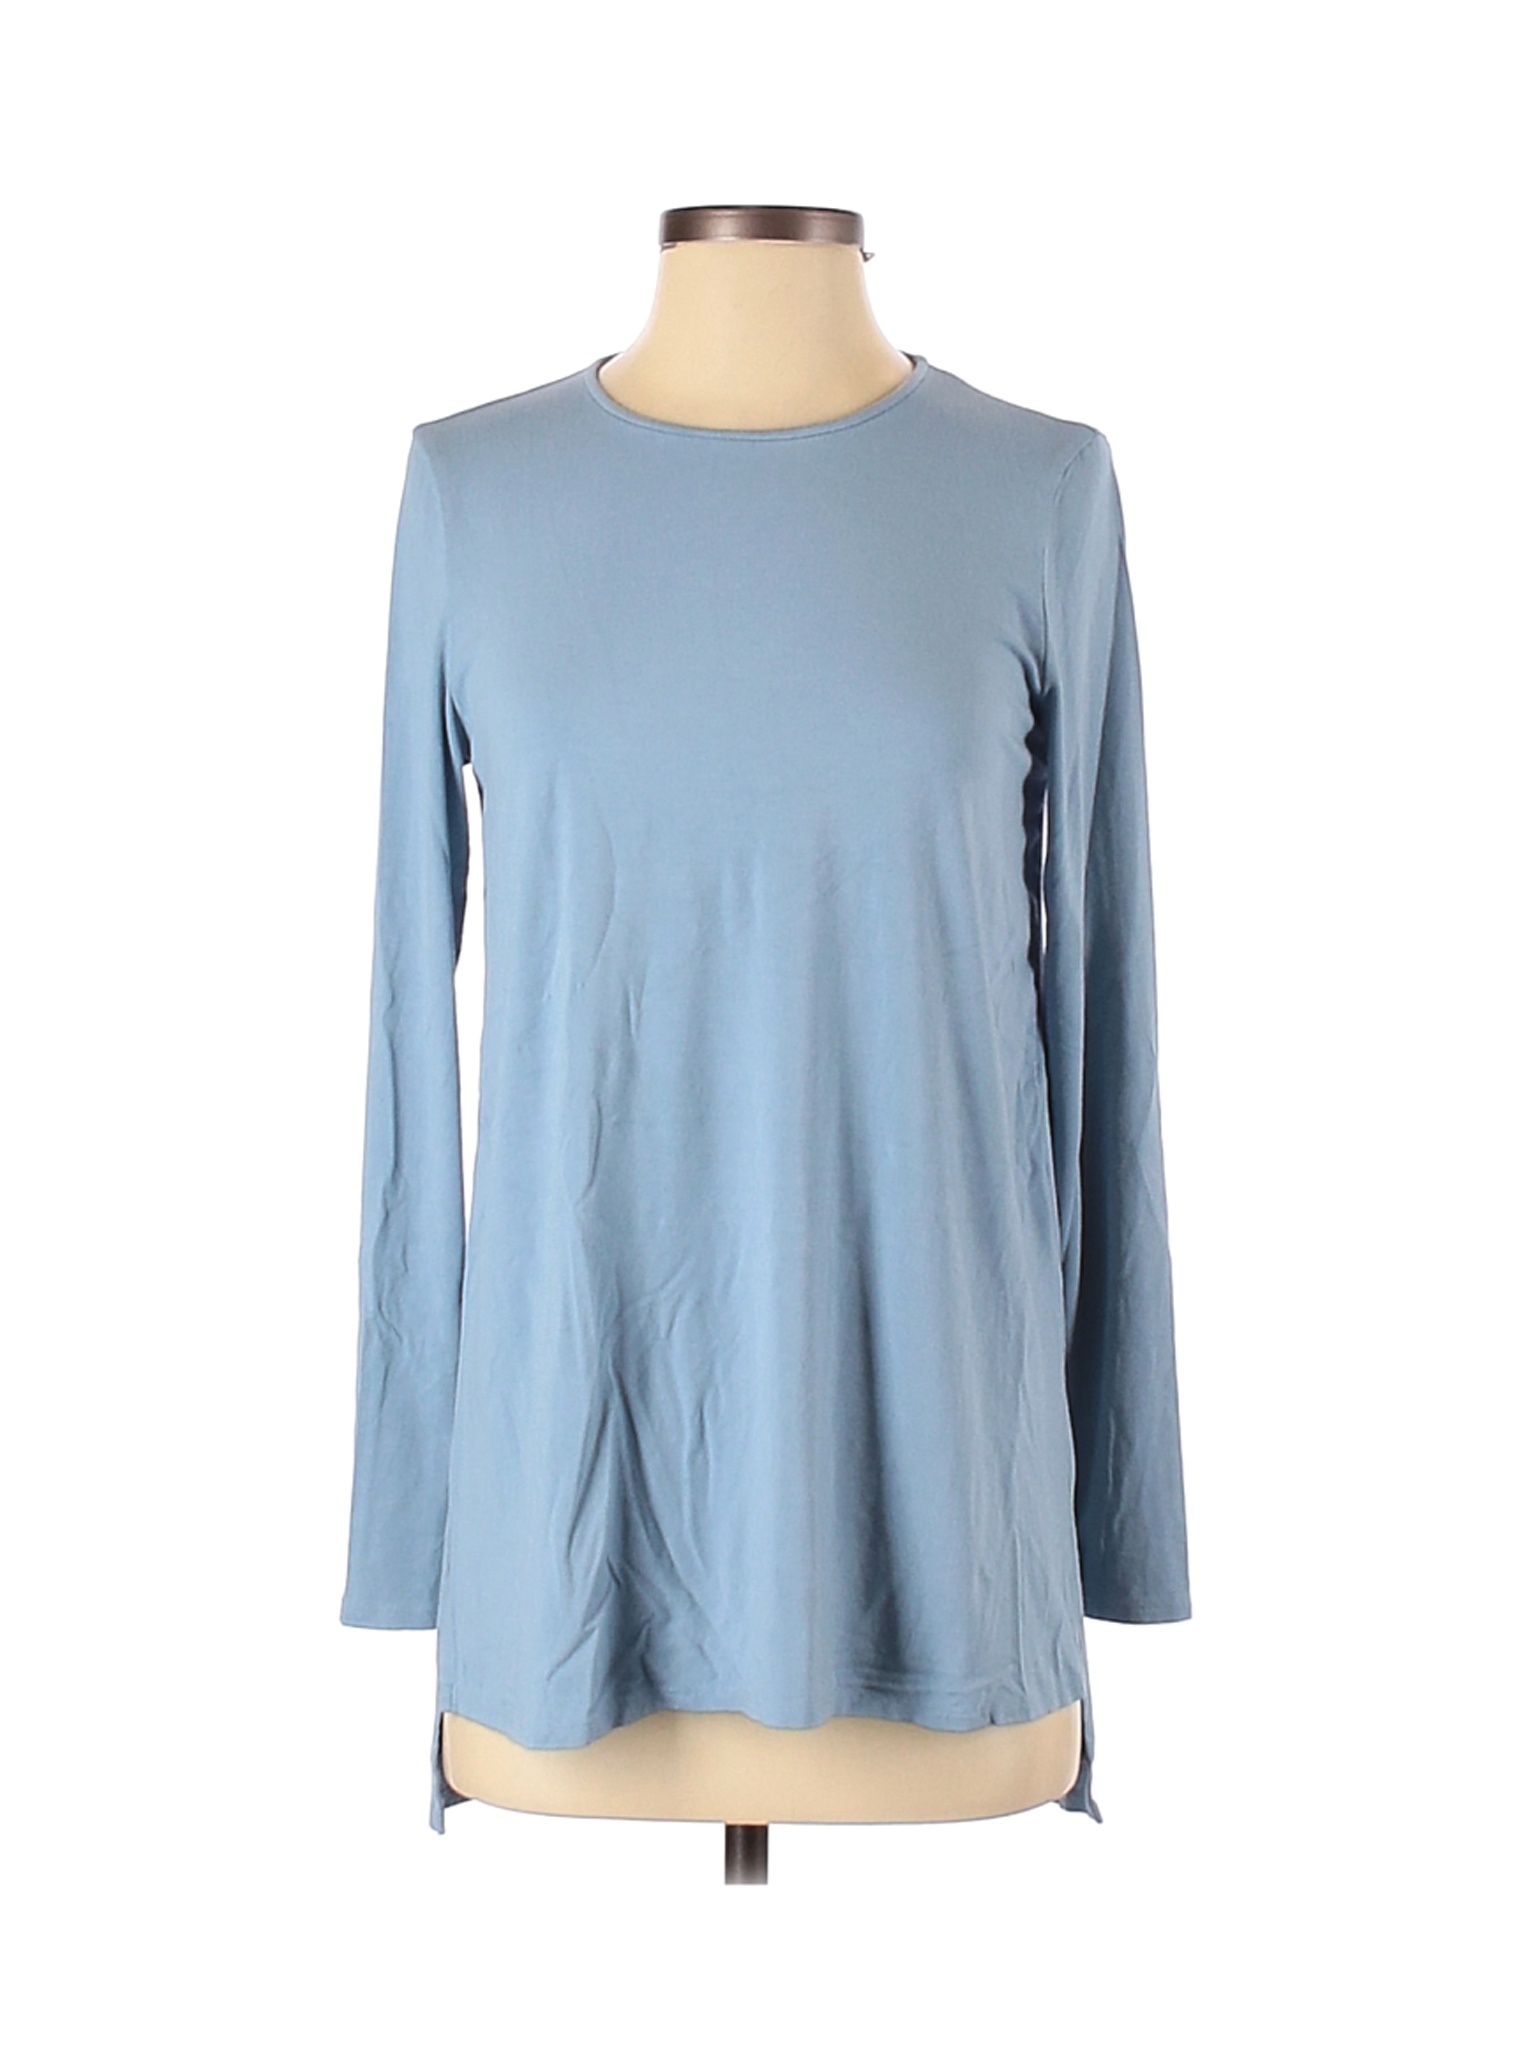 Eileen Fisher Women Blue Long Sleeve T-Shirt S | eBay